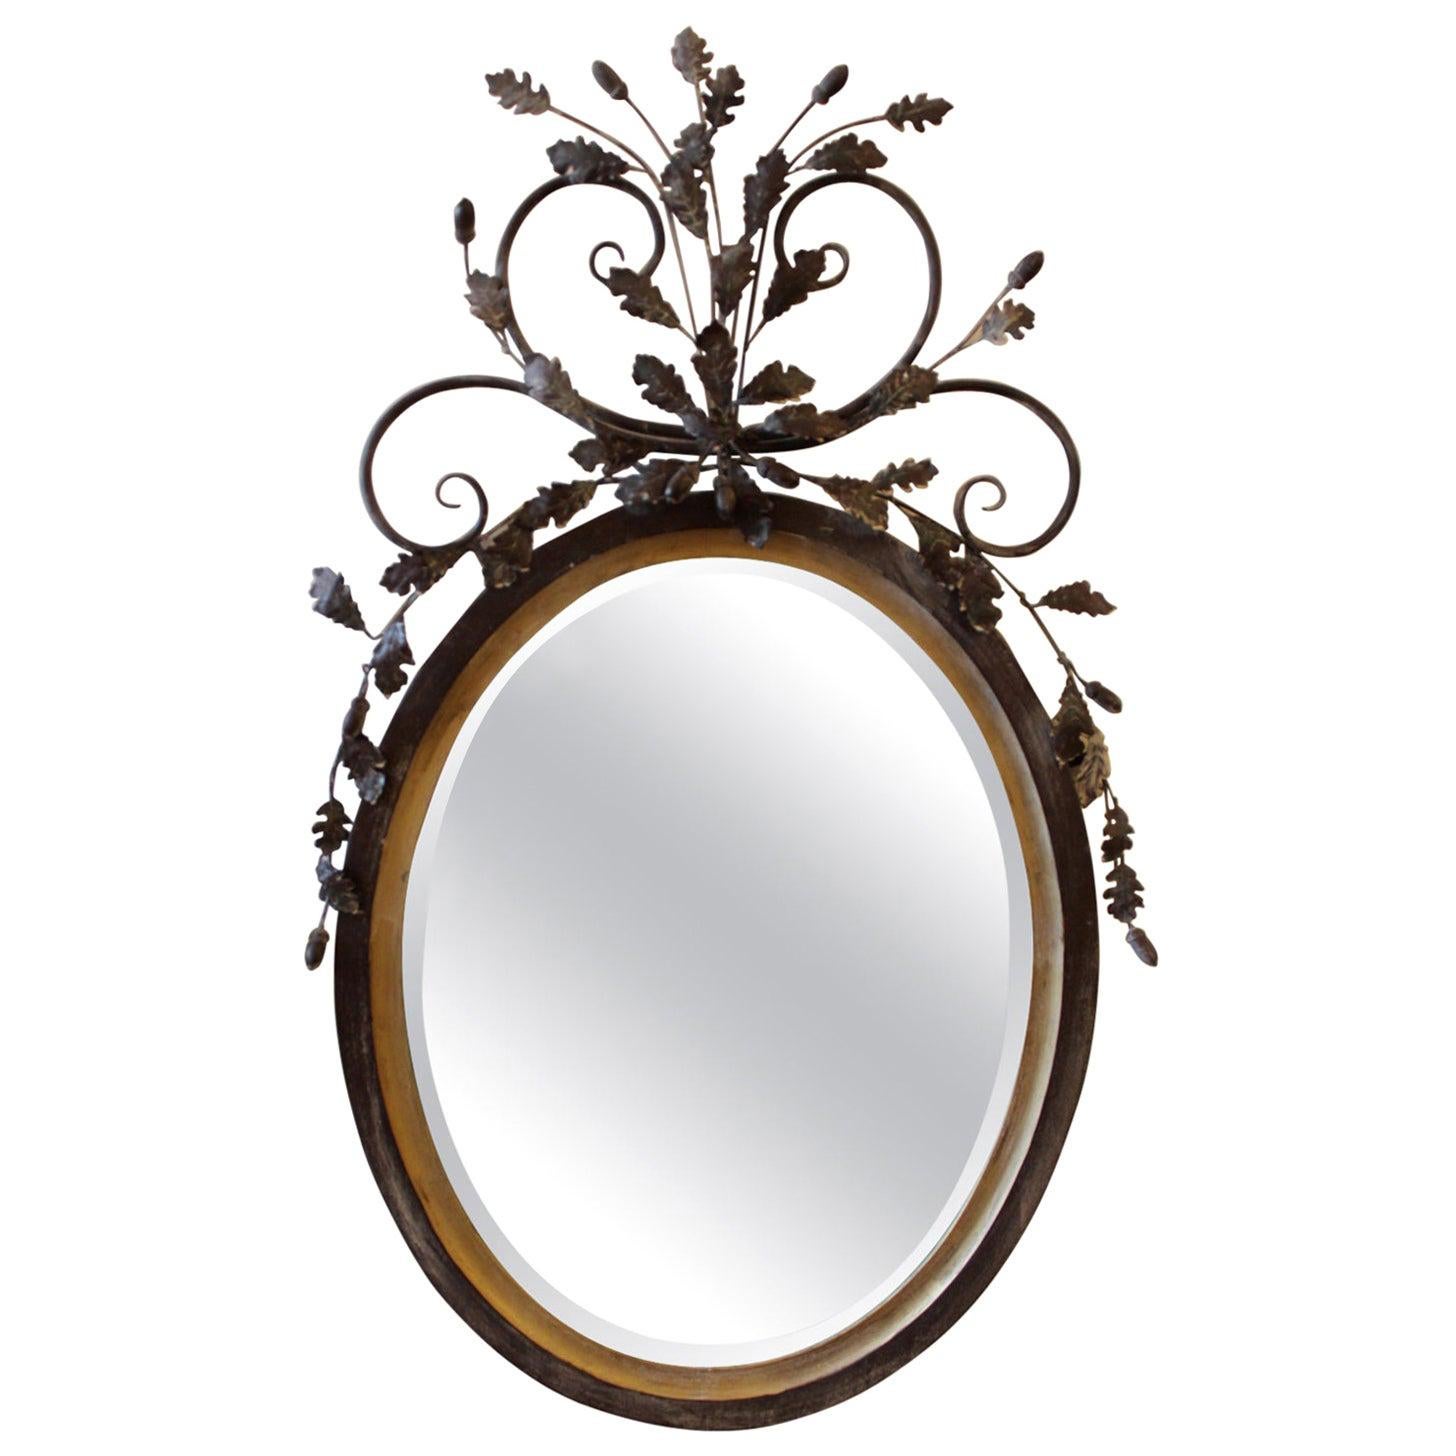 La Barge Oval Adam Style Wood and Italian Metal Beveled Mirror